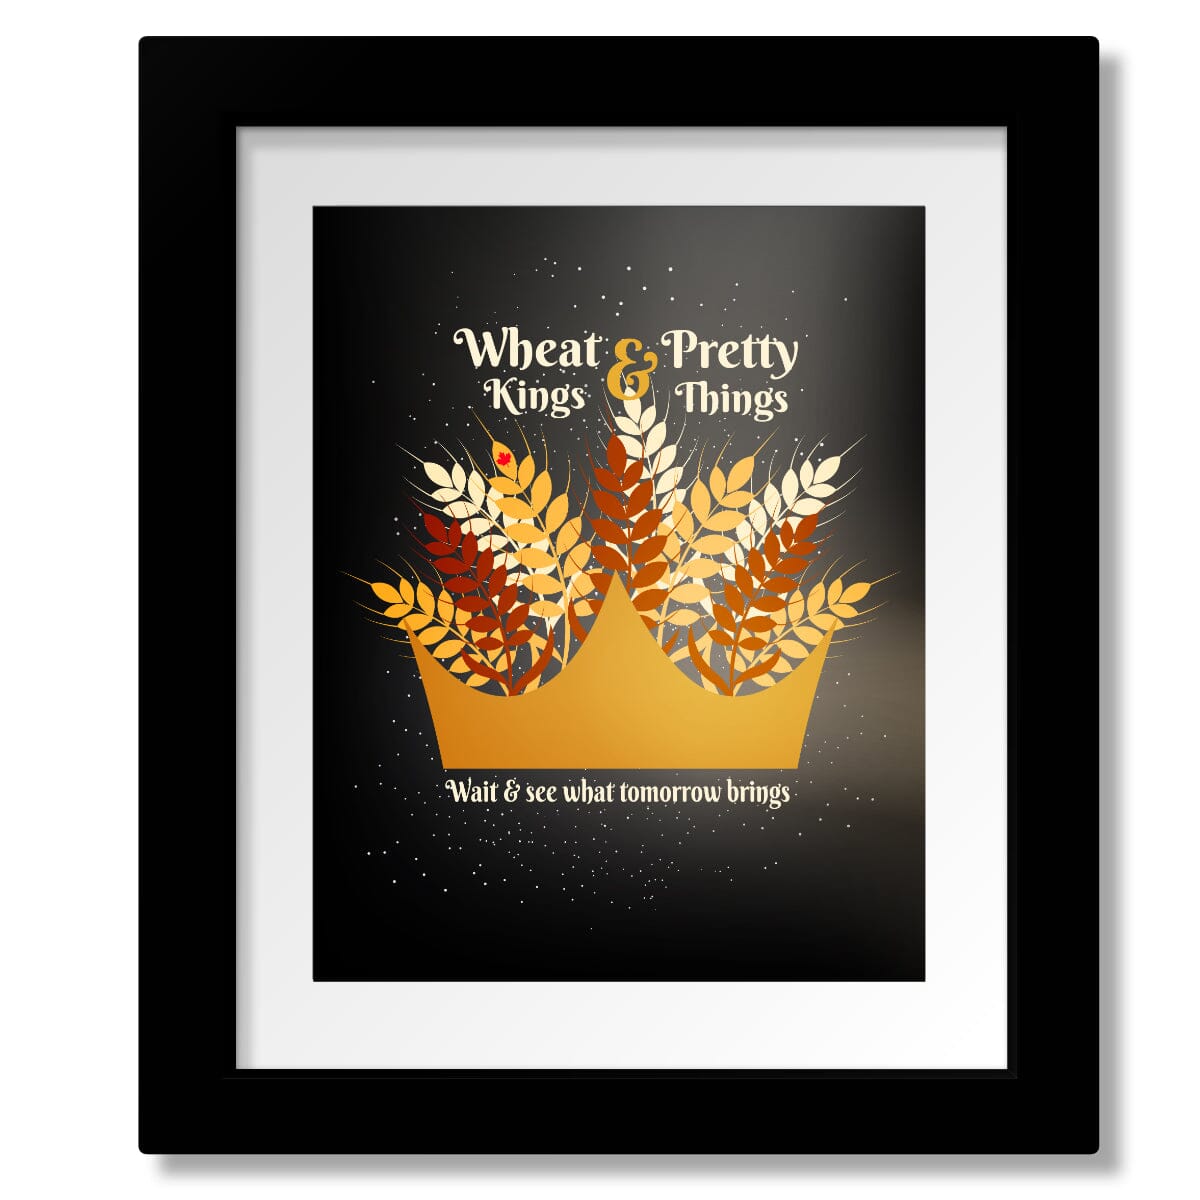 Wheat Kings by Tragically Hip - Lyric Inspired Music Print Song Lyrics Art Song Lyrics Art 8x10 Matted and Framed Print 